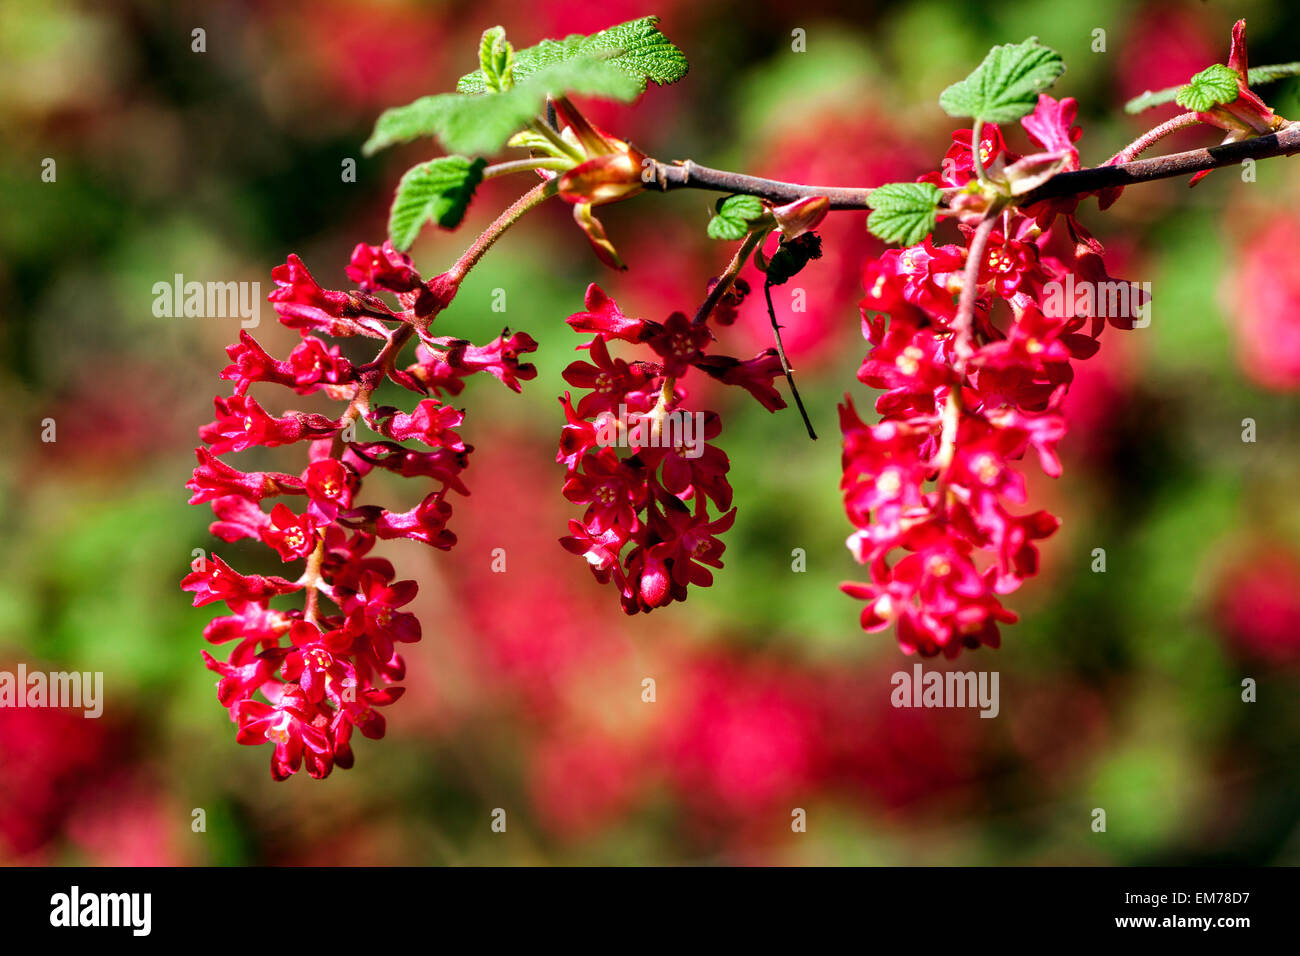 Ribes sanguineum 'Koja' currant Stock Photo